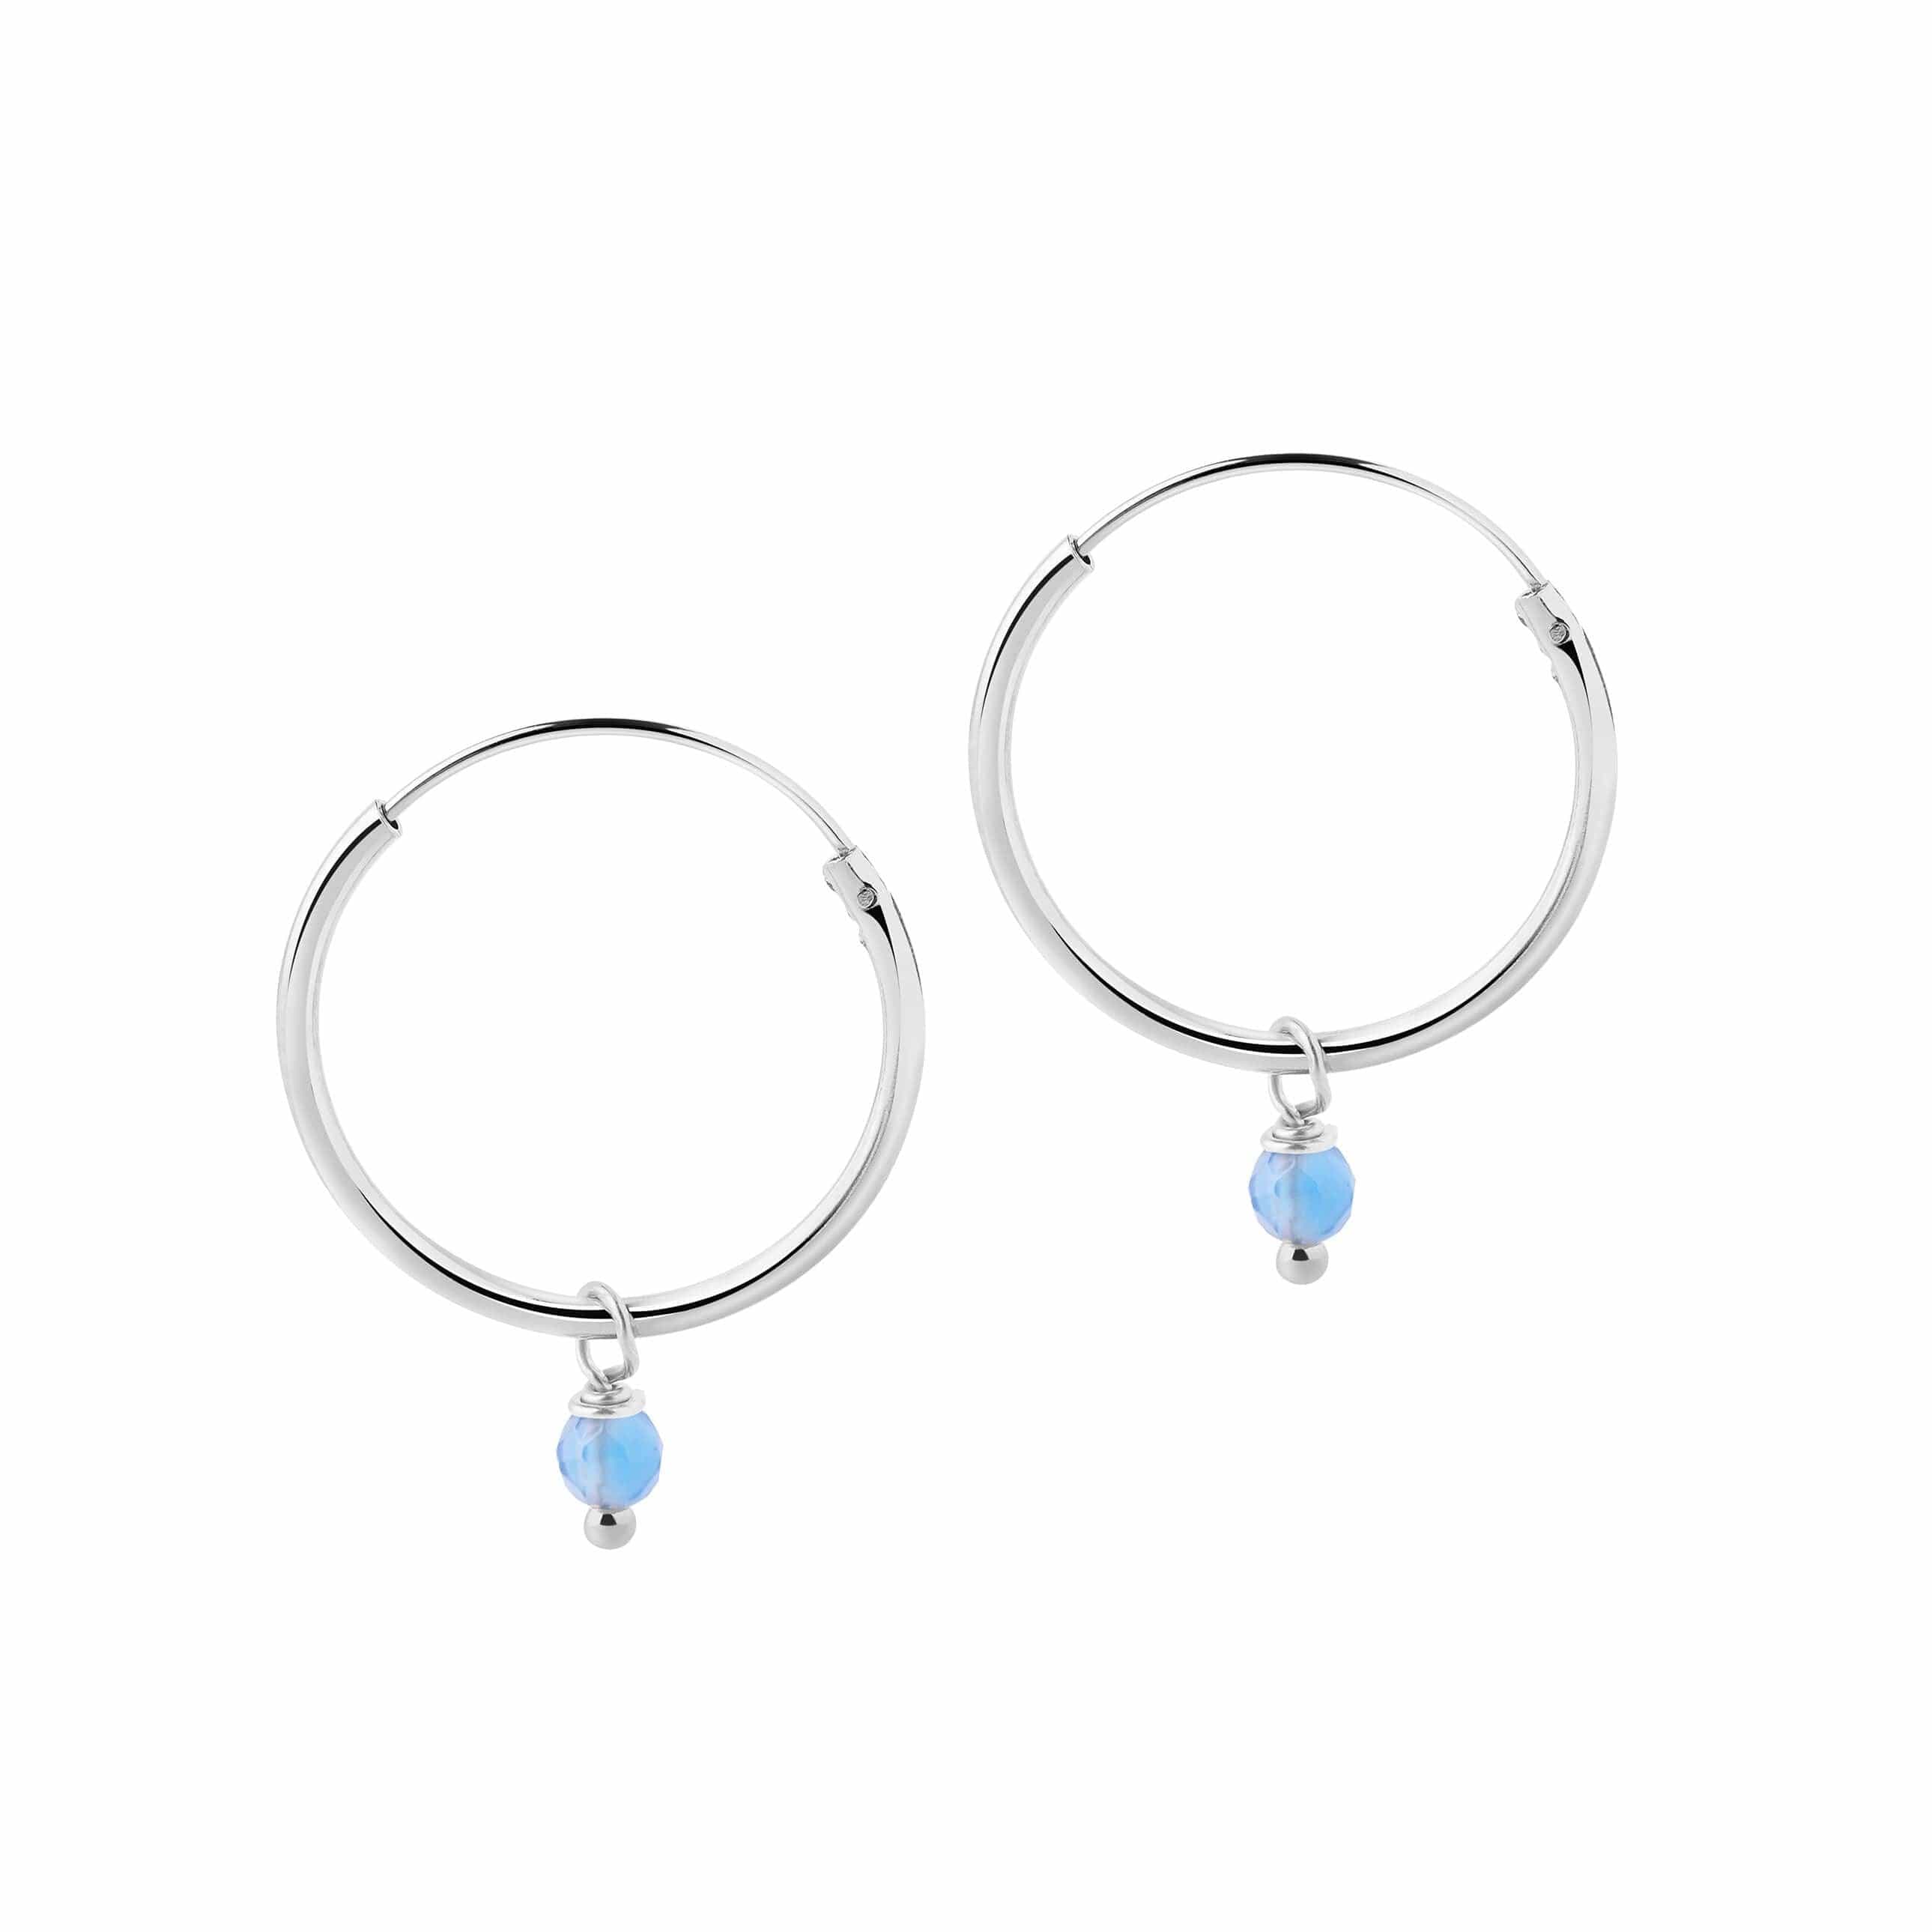 18mm silver Hoop Earrings with Blue Stone